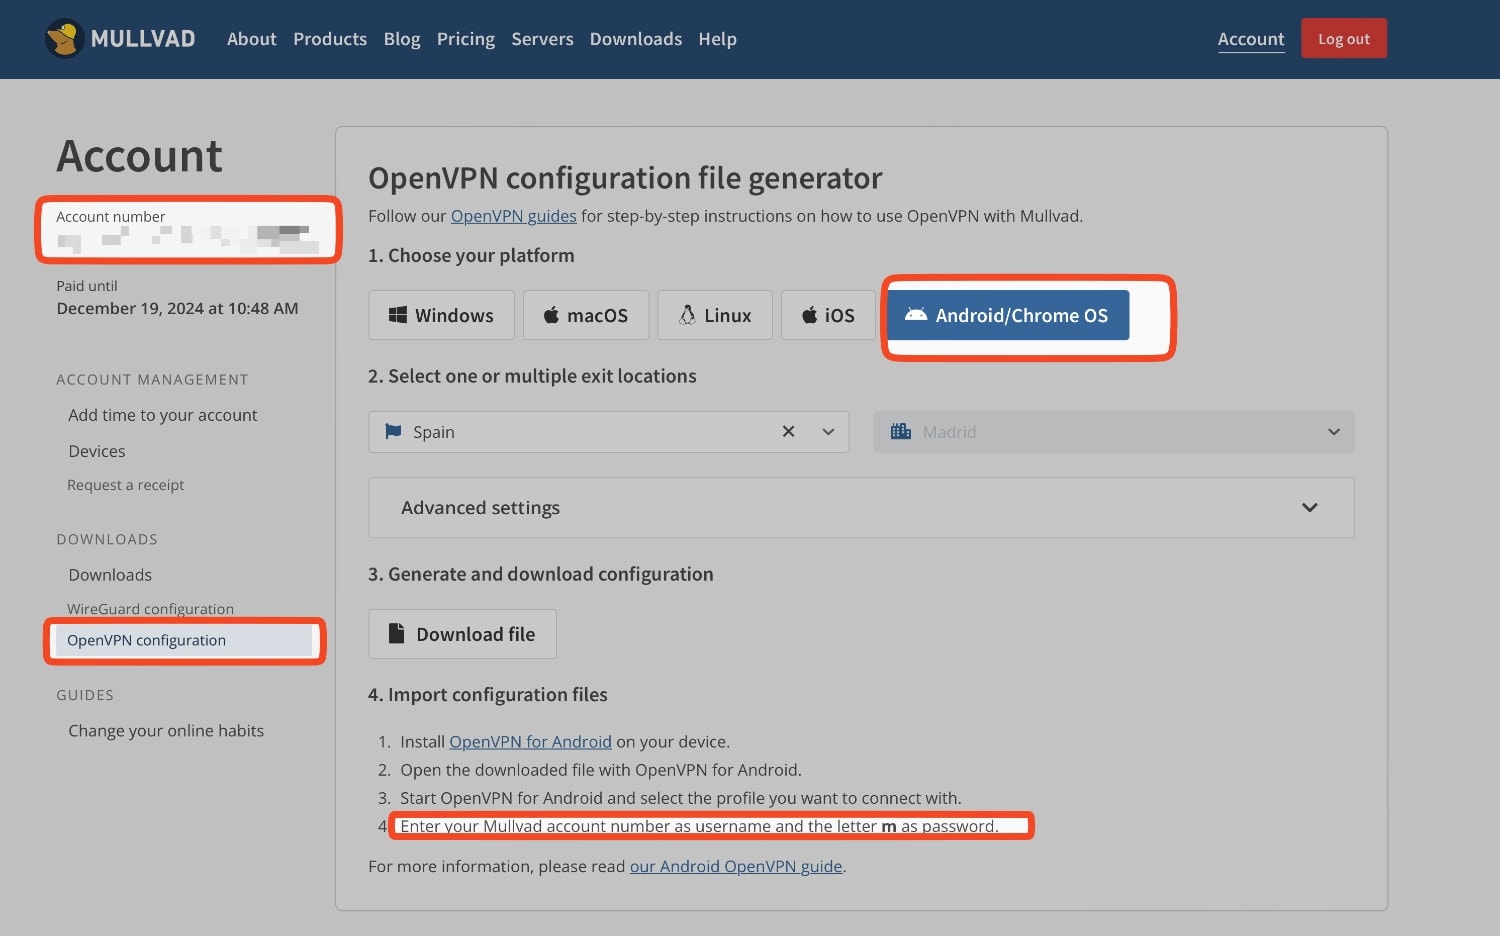 Downloads > OpenVPN configuration de Mullvad.